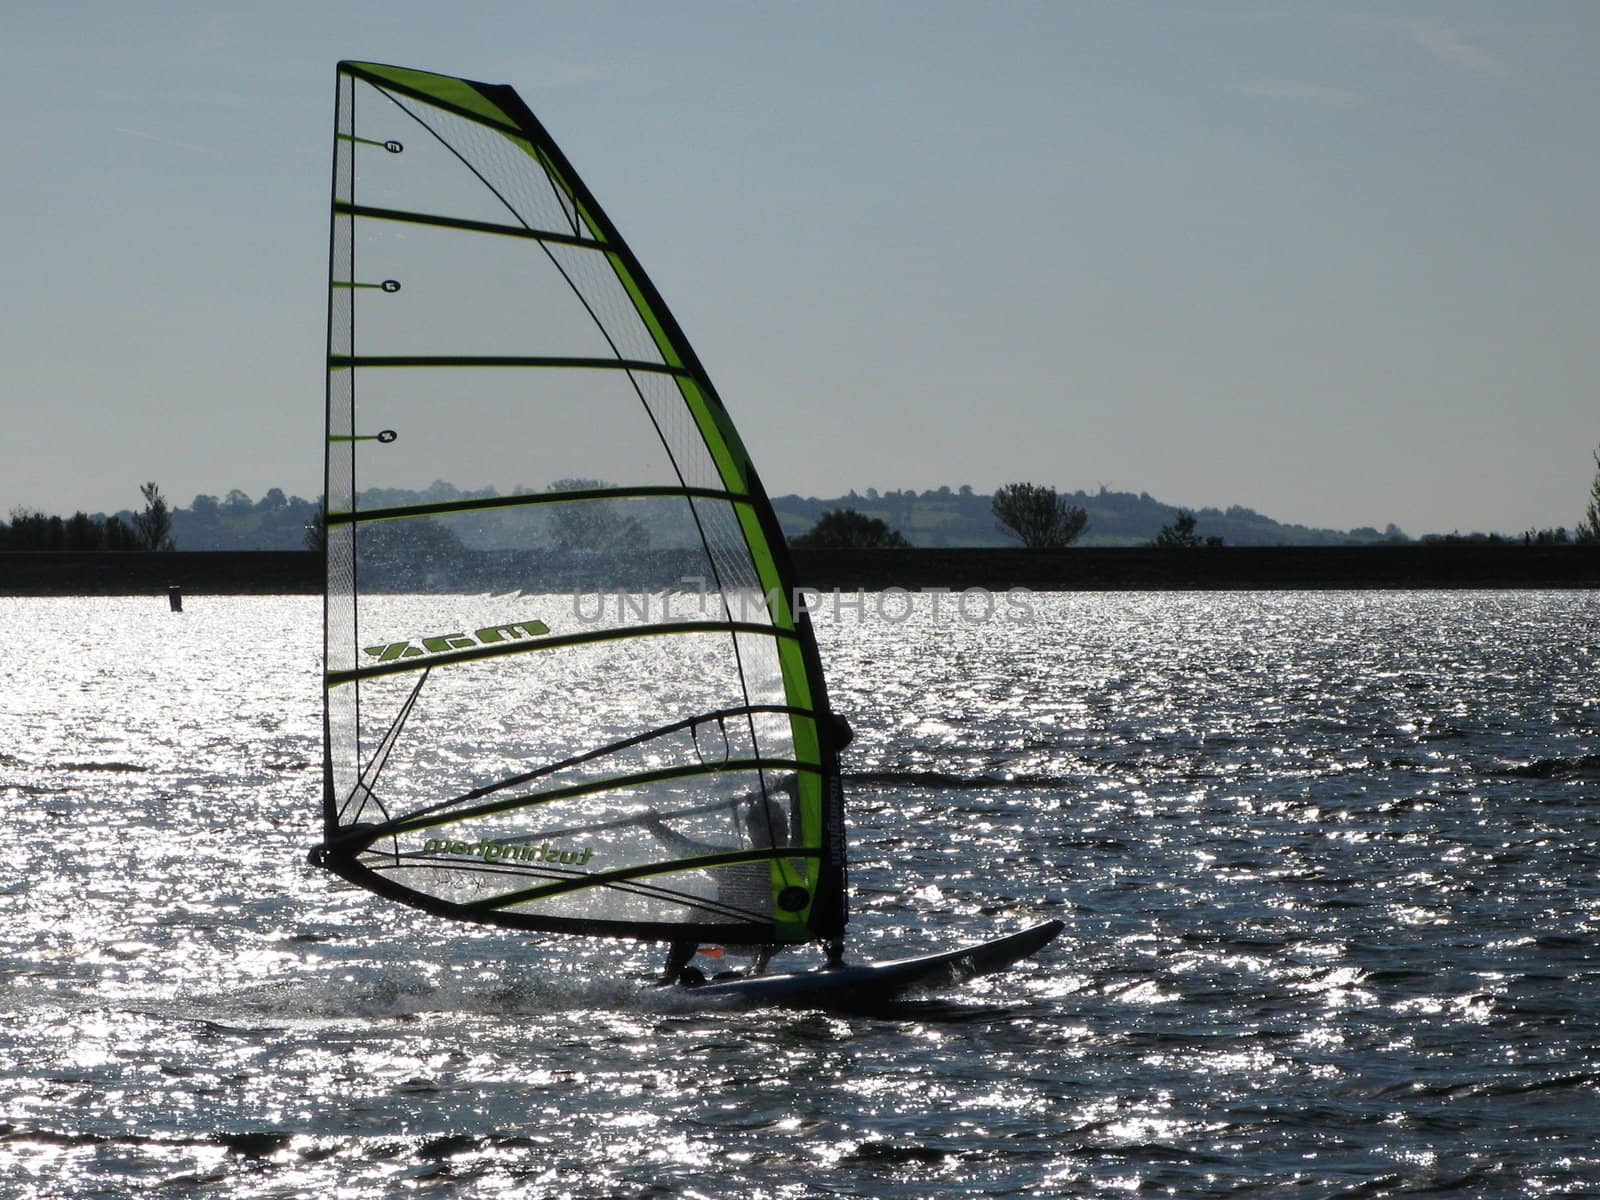 Windsurfing on Draycote Water